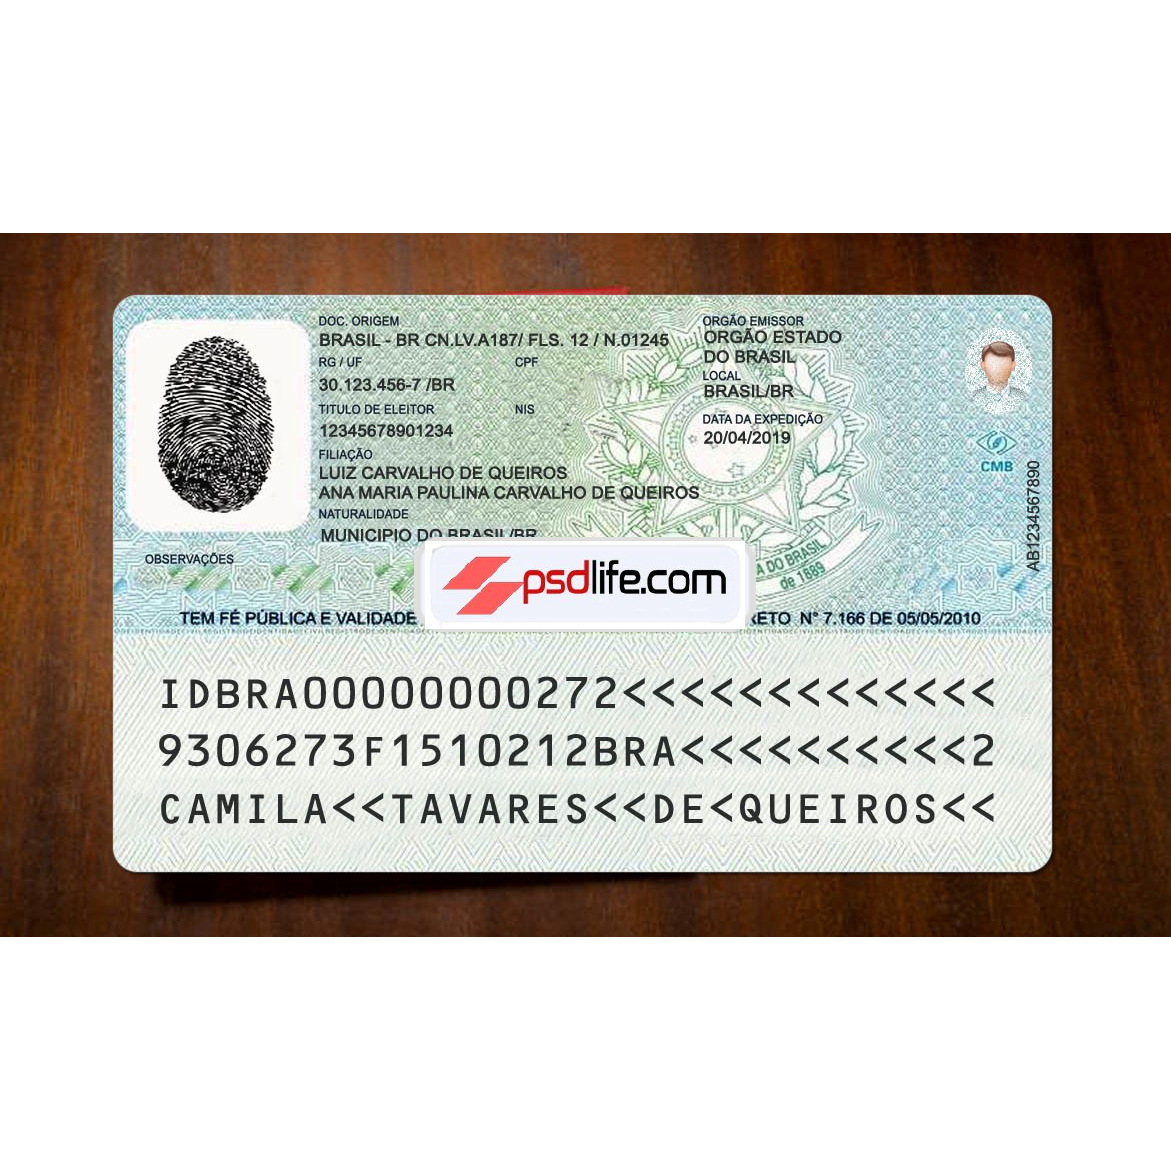 Brazil ID card psd template full editable | Brazil fake id card Template photoshop use for | Modelo psd de cartão de identidade falso do Brasil editável